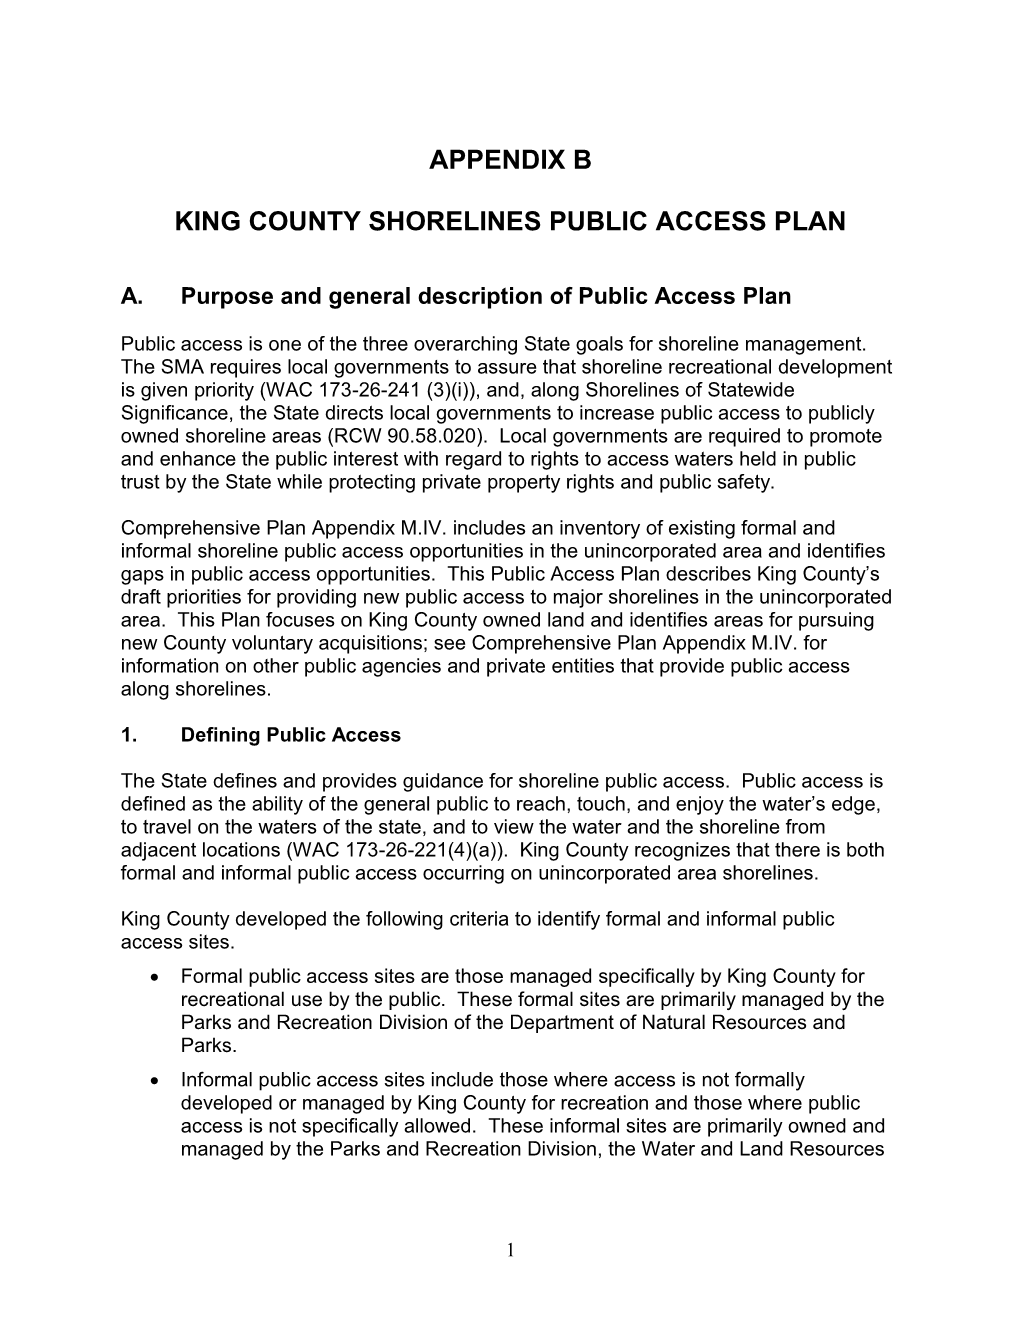 Shorelines Public Access Plan